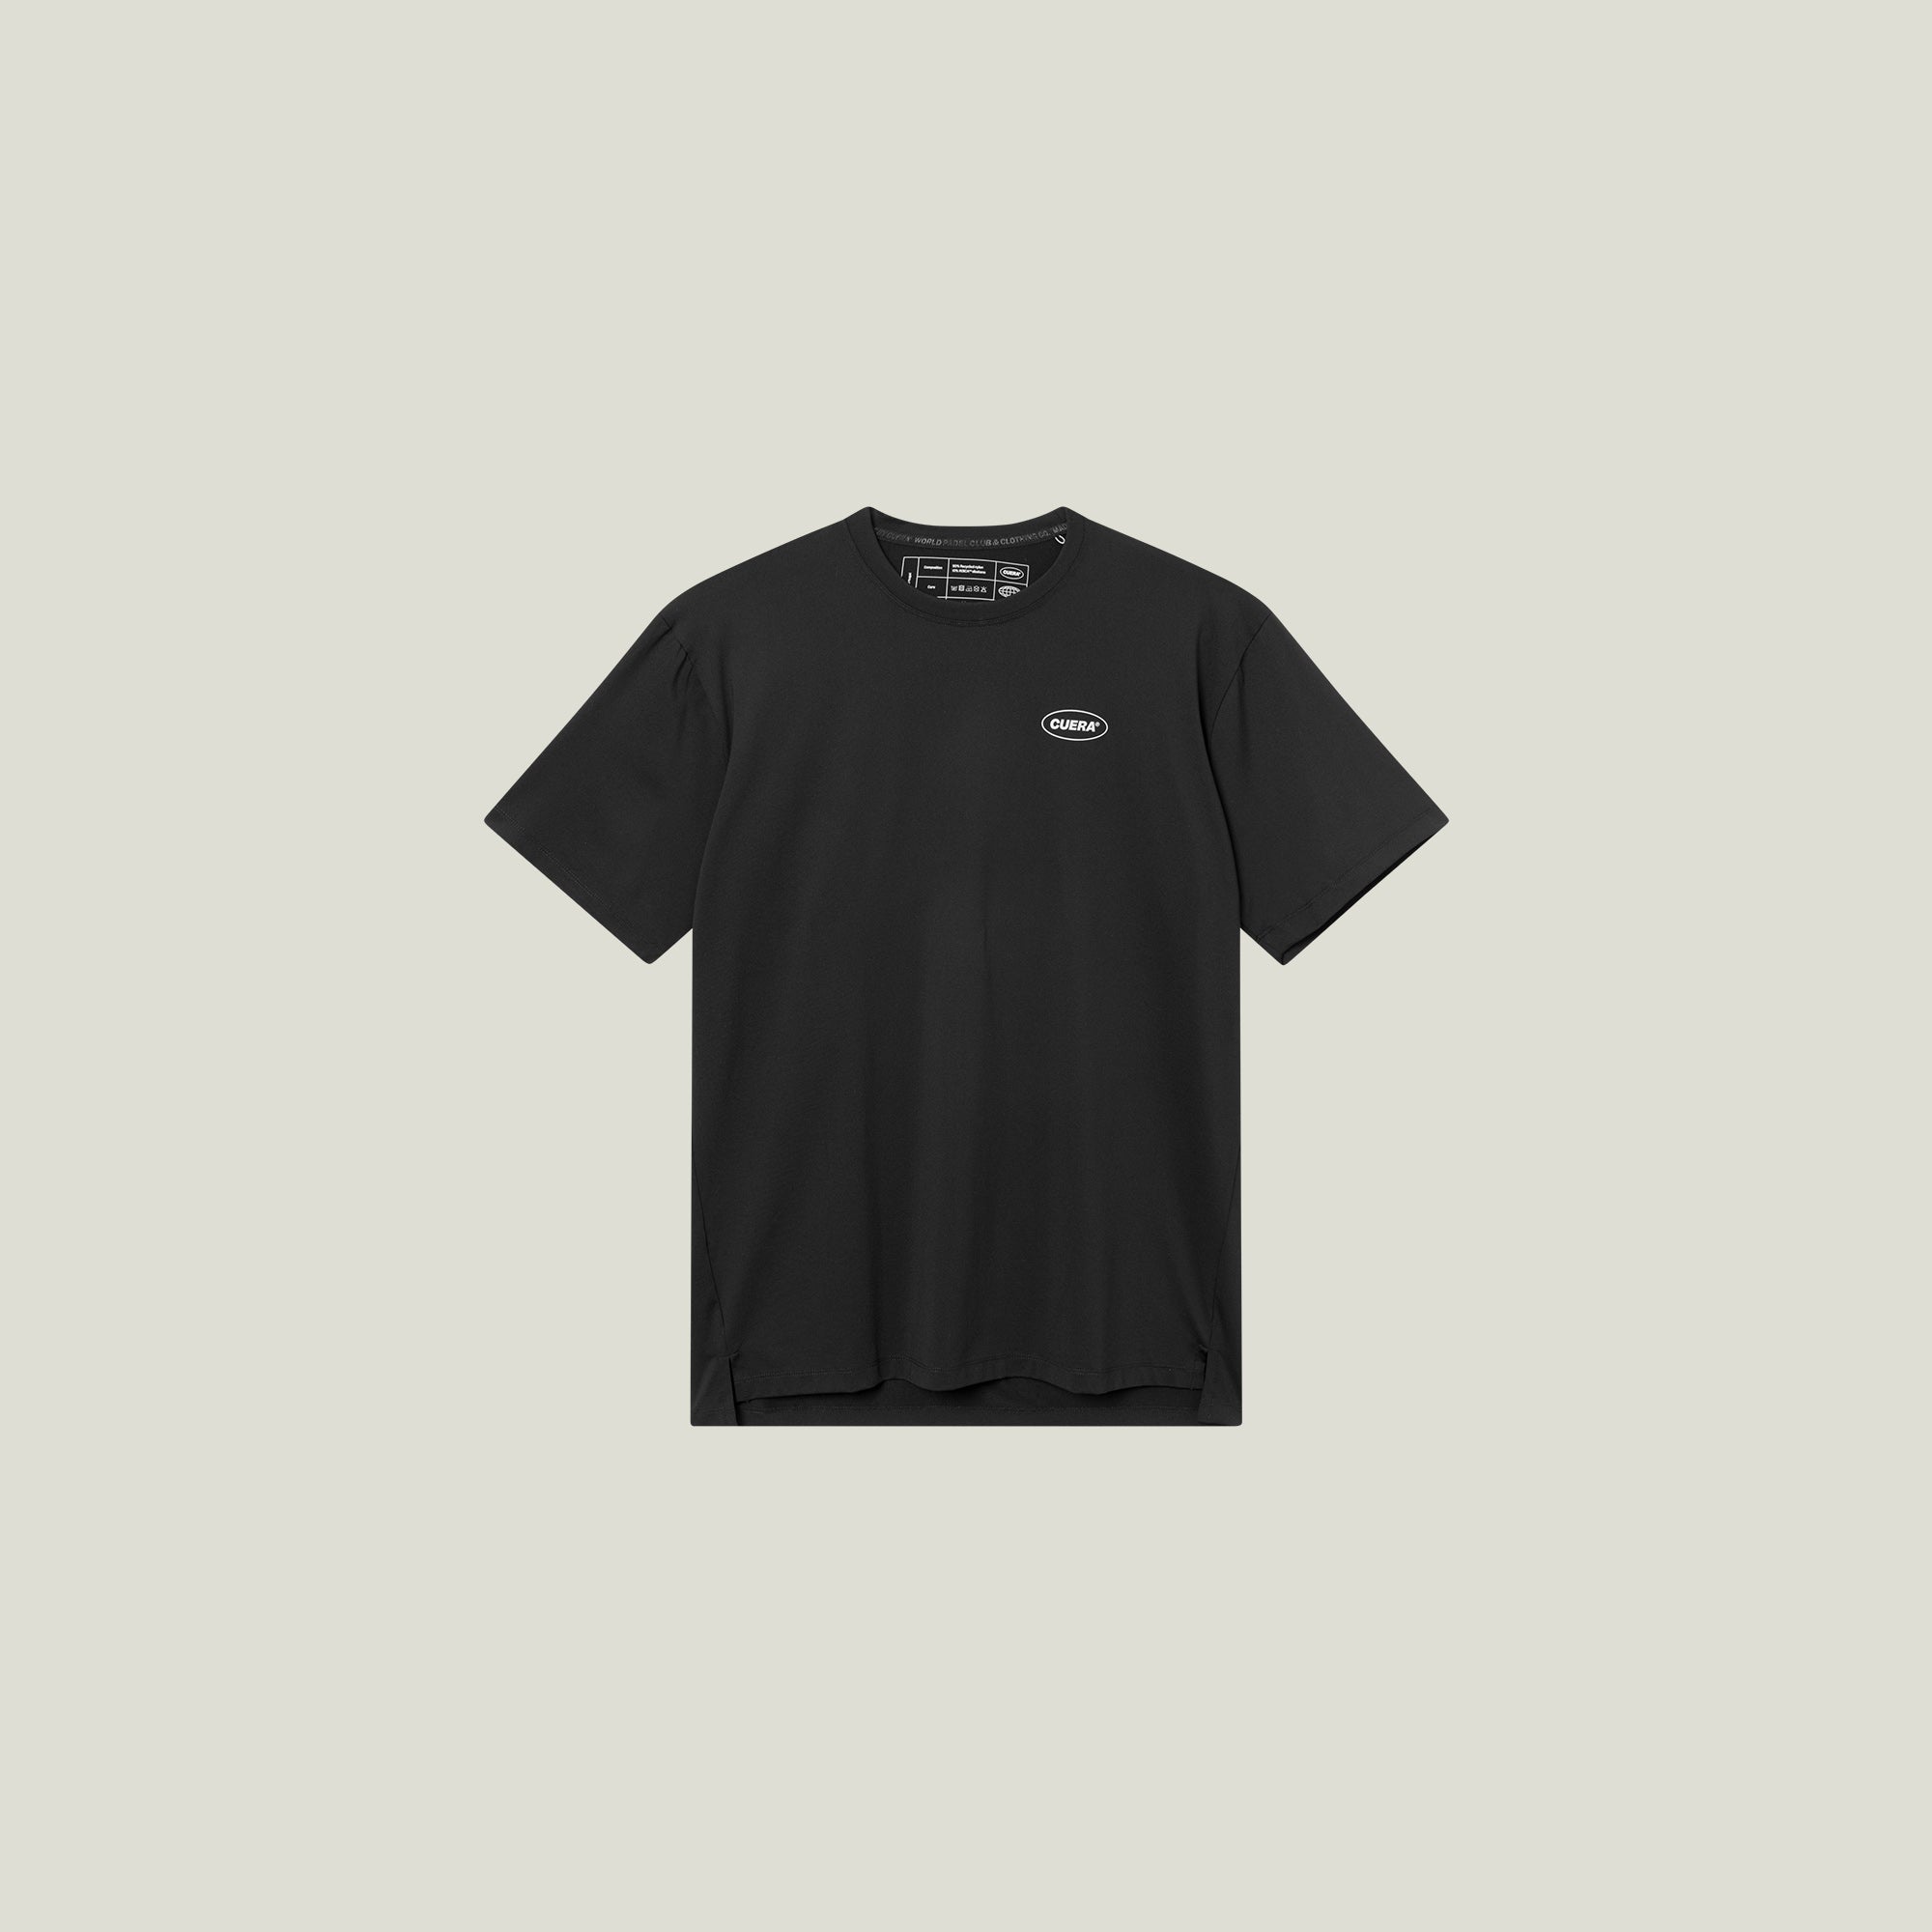 Cuera Oncourt Made T-shirt (Black)